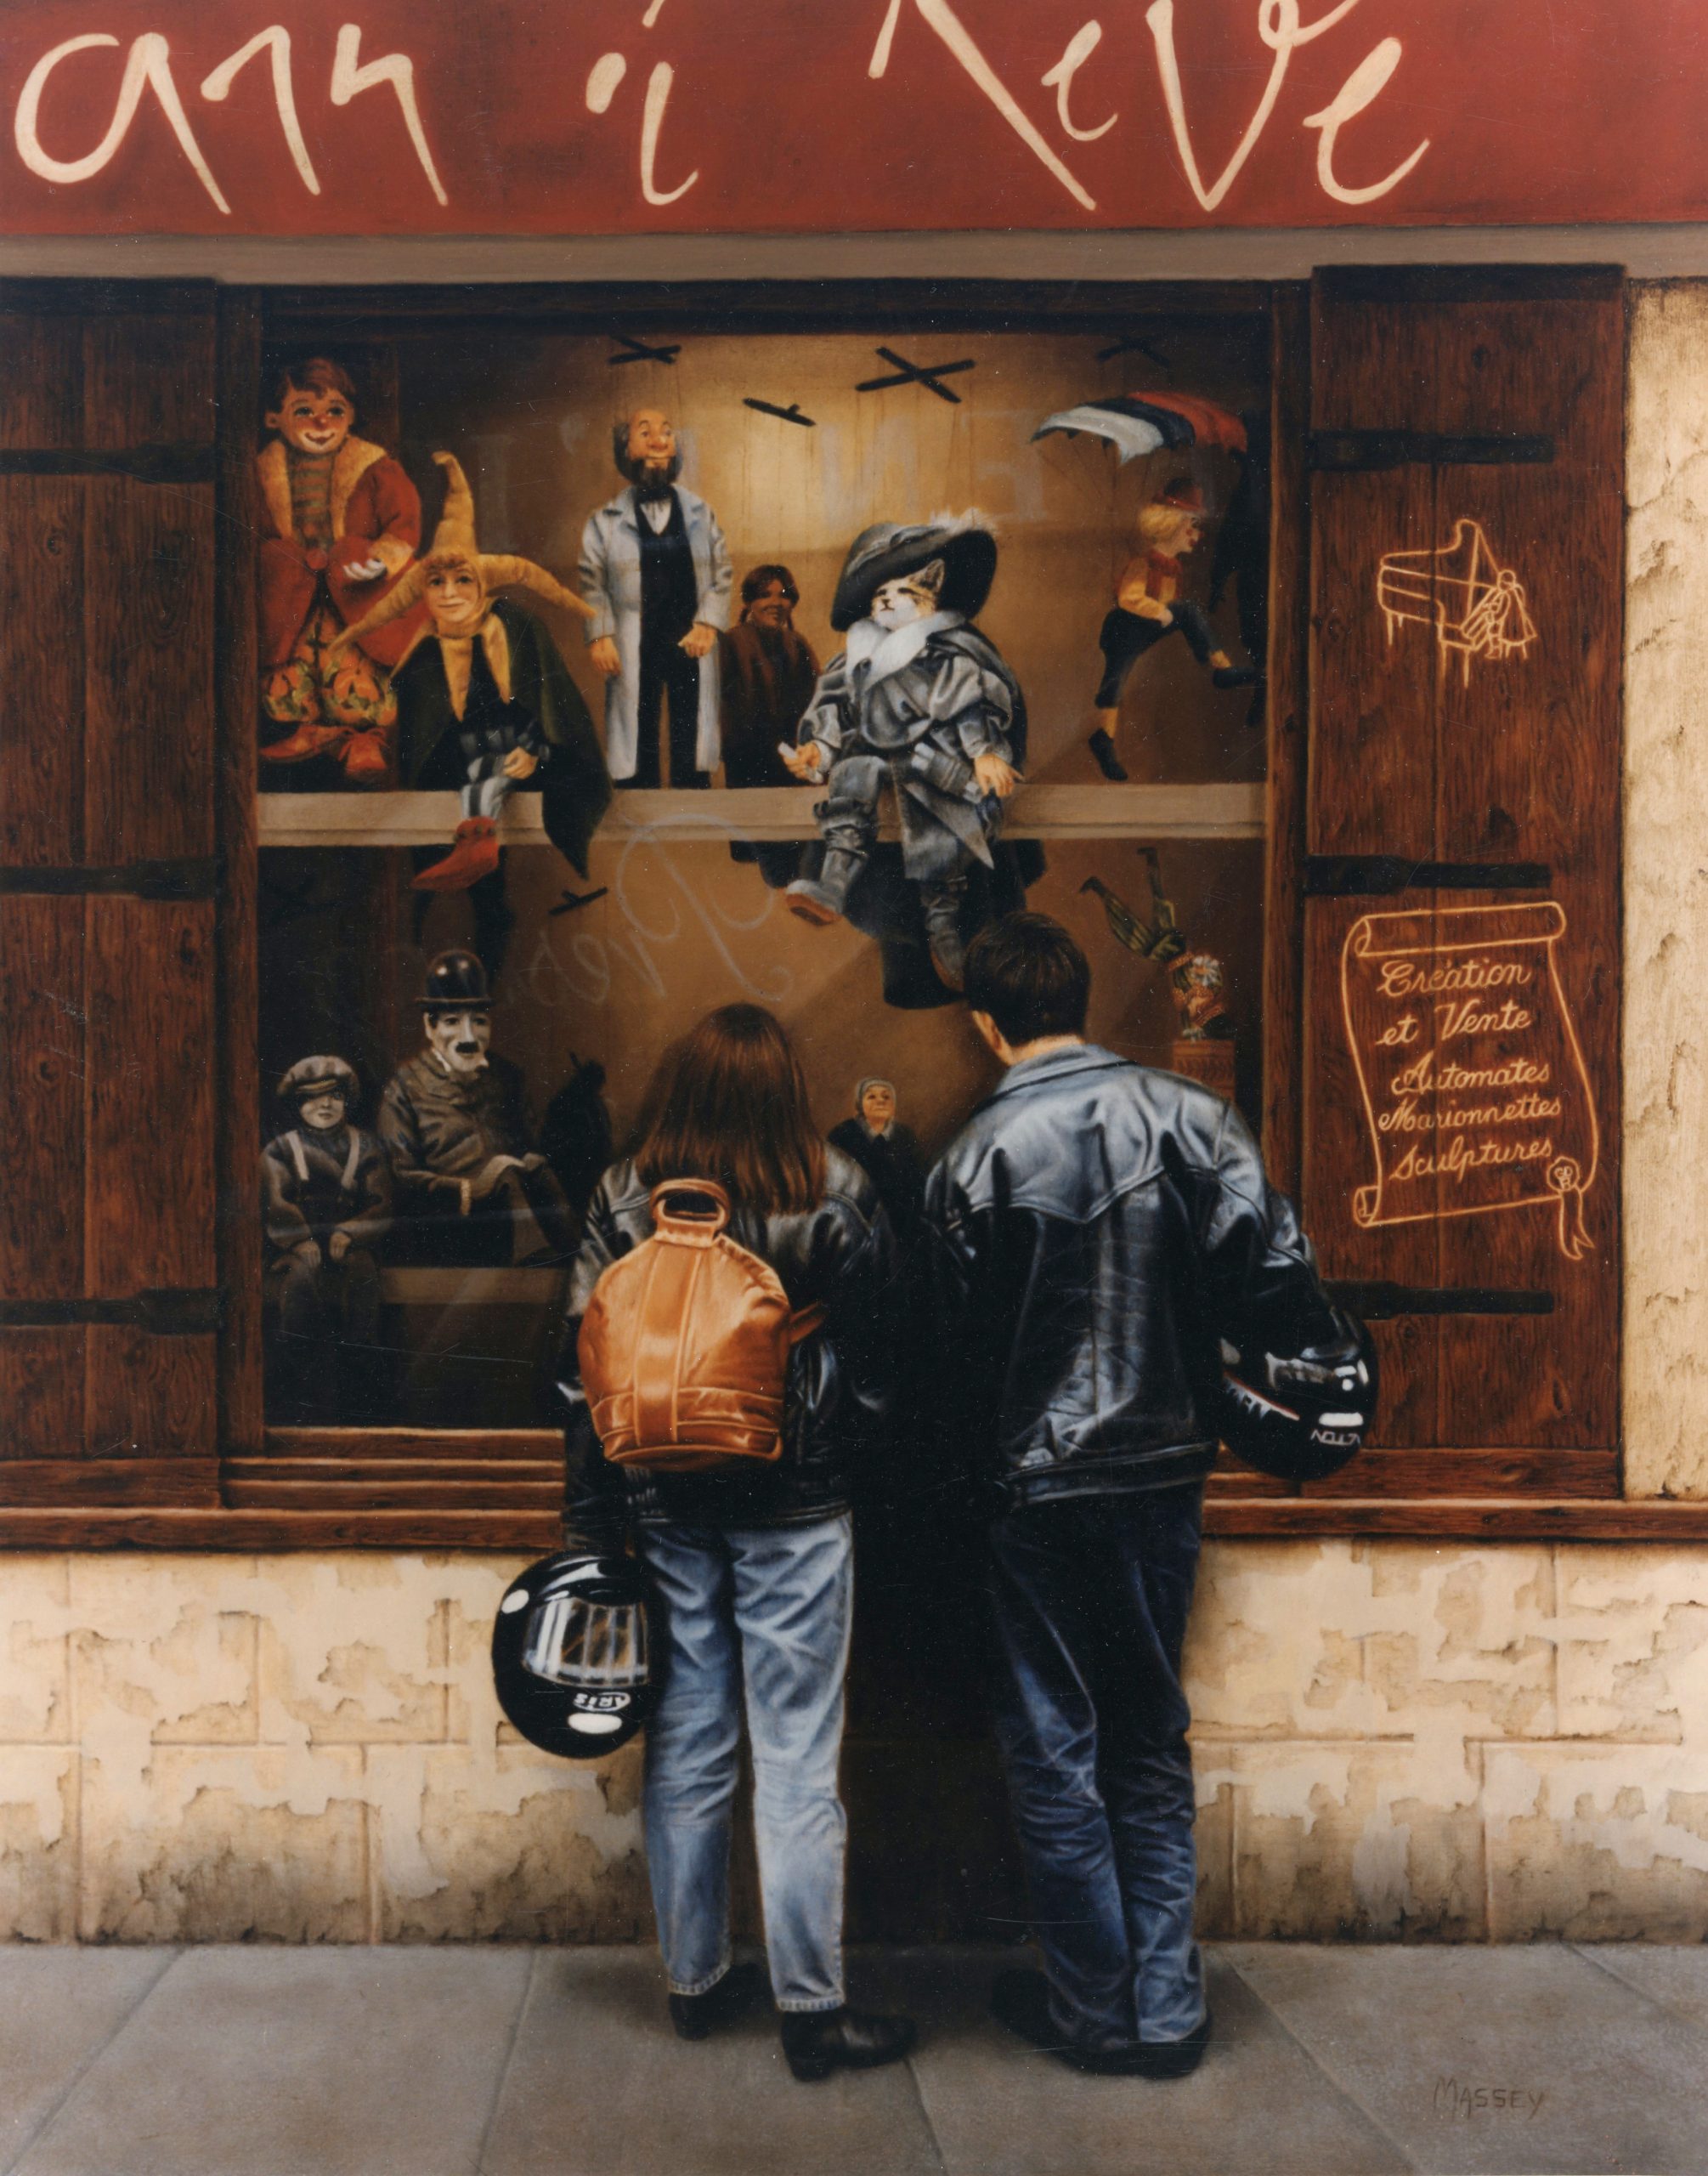 The Marionette Shop ©1996 Ann James Massey